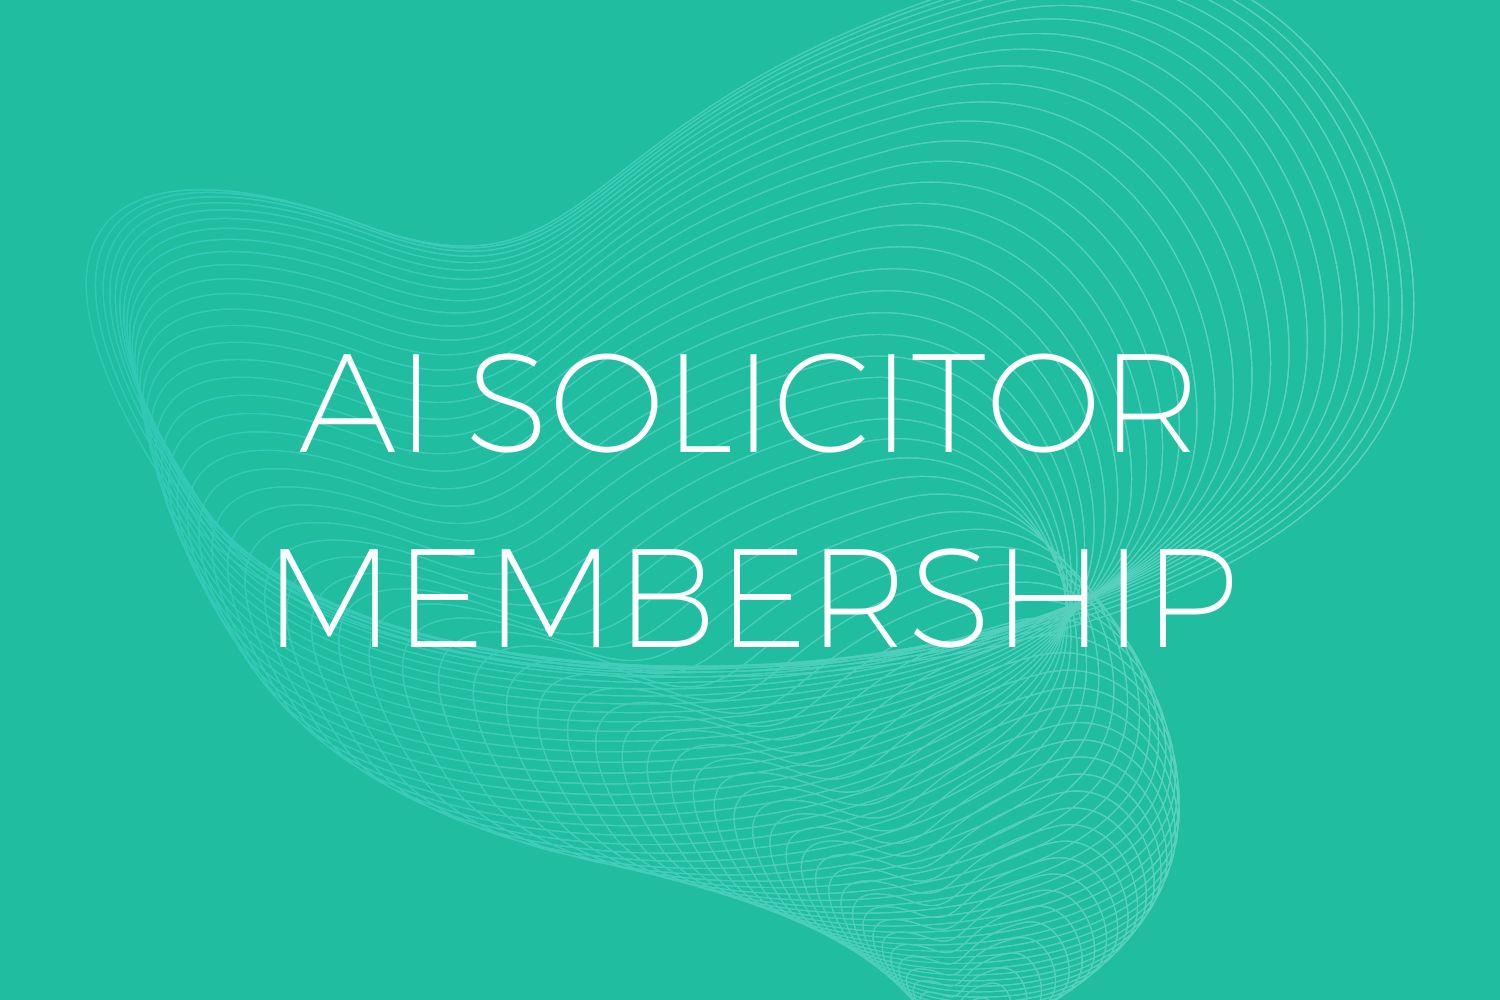 AI Solicitor Membership